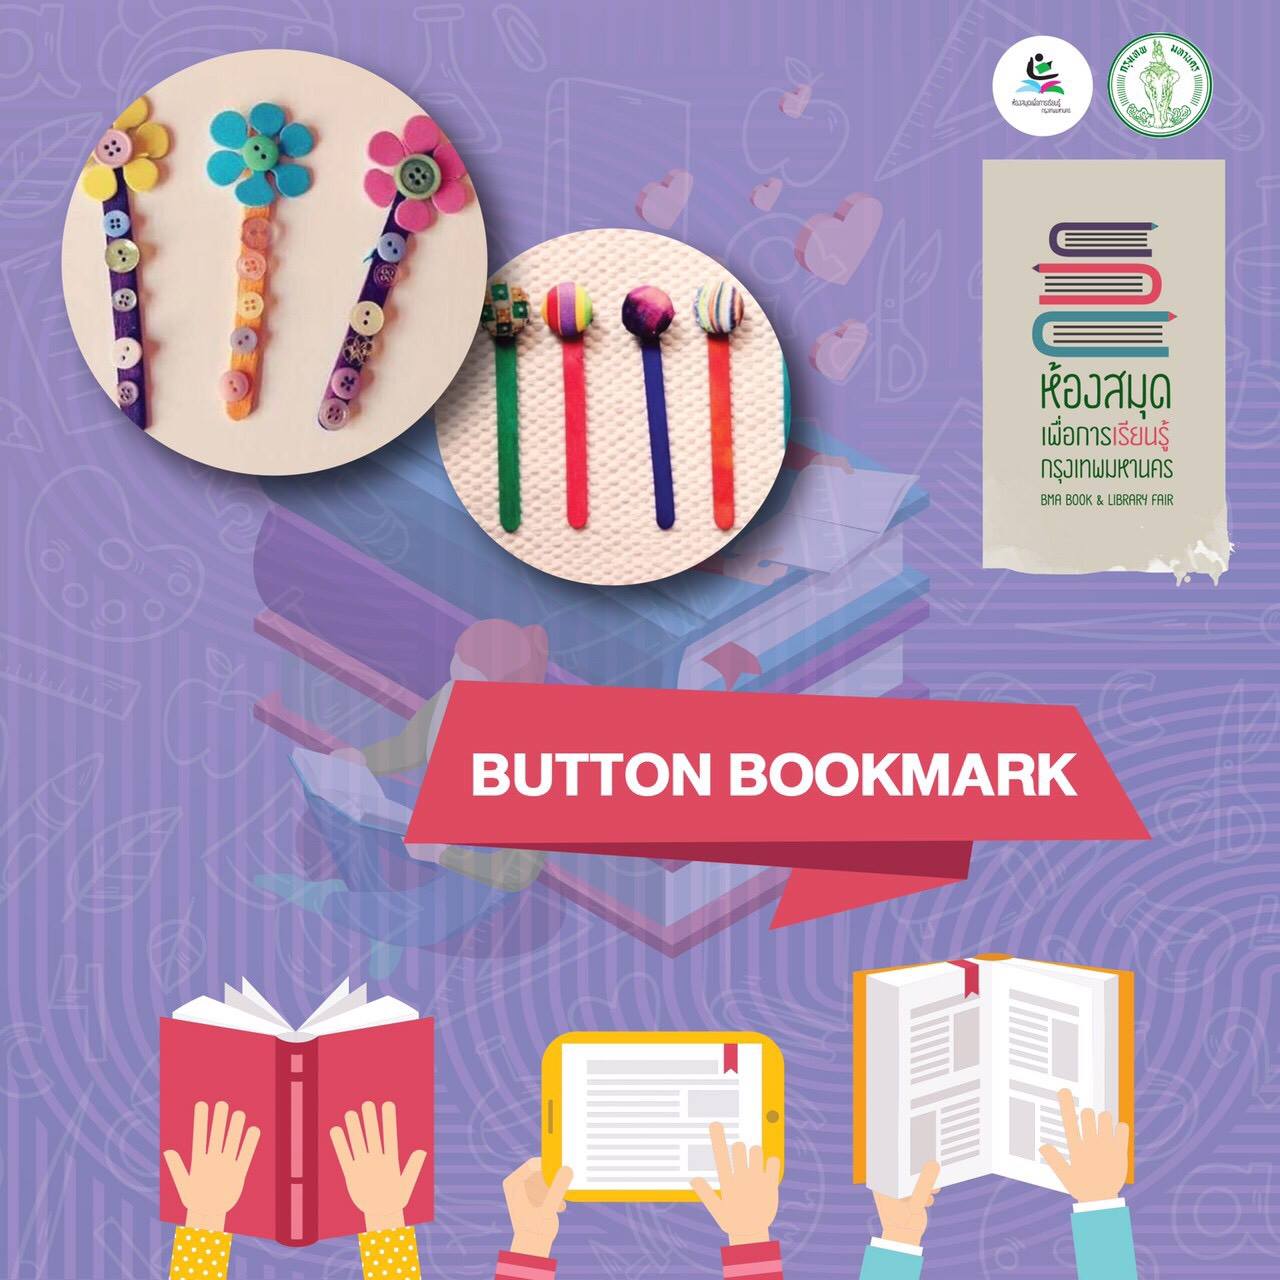 BMA Book & Library Fair 2019 งานสัปดาห์หนังสือแห่งชาติ ครั้งที่ 47